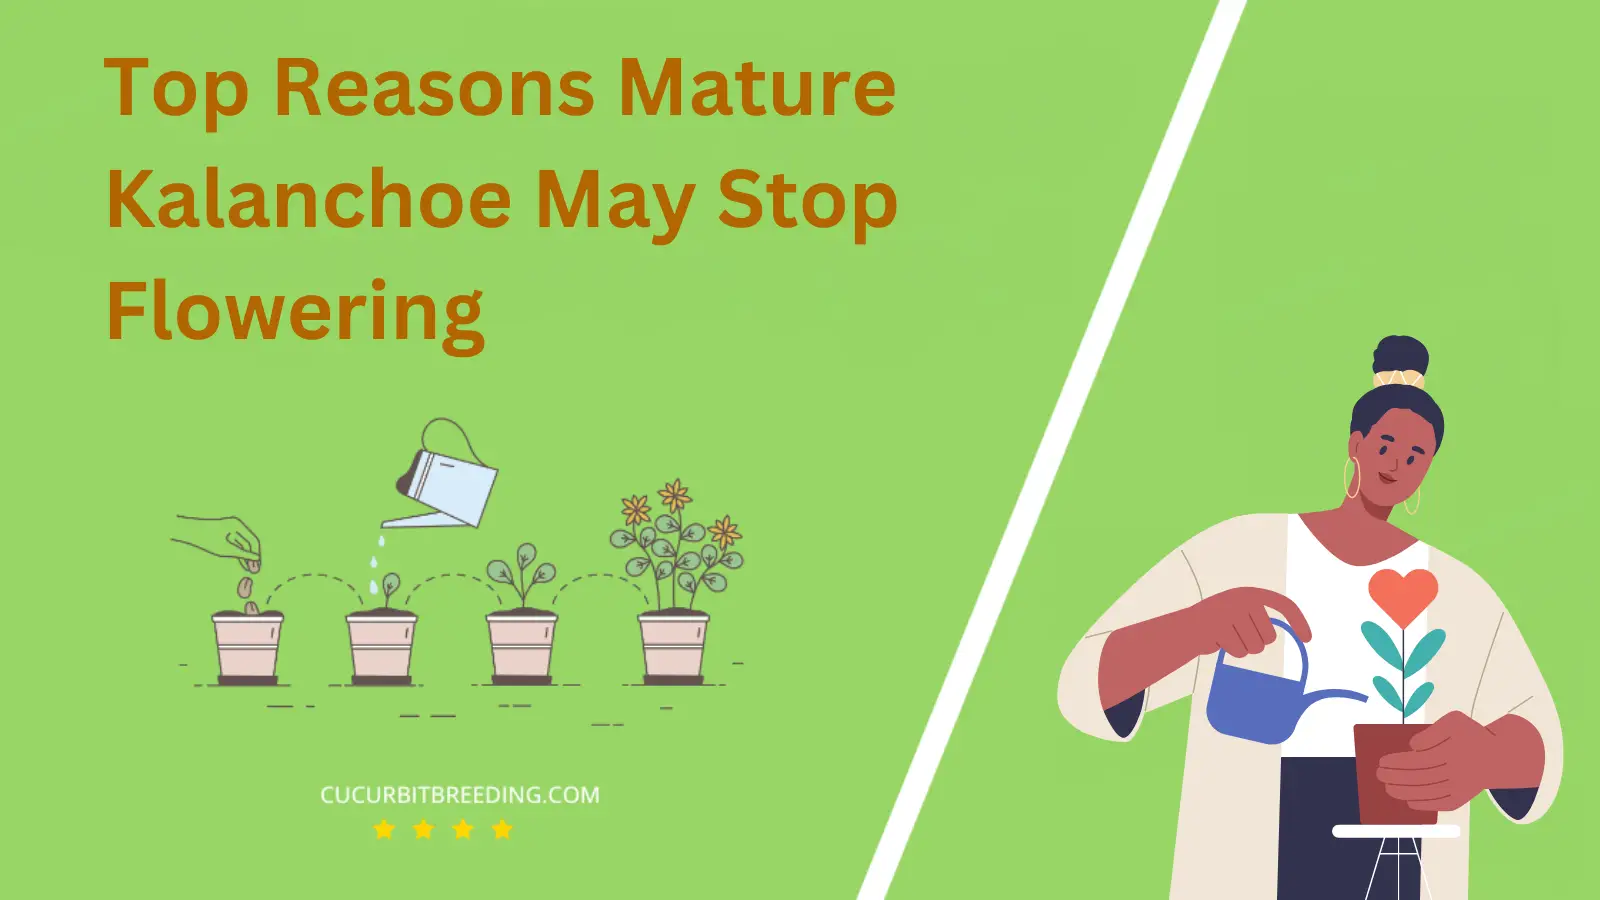 Top Reasons Mature Kalanchoe May Stop Flowering